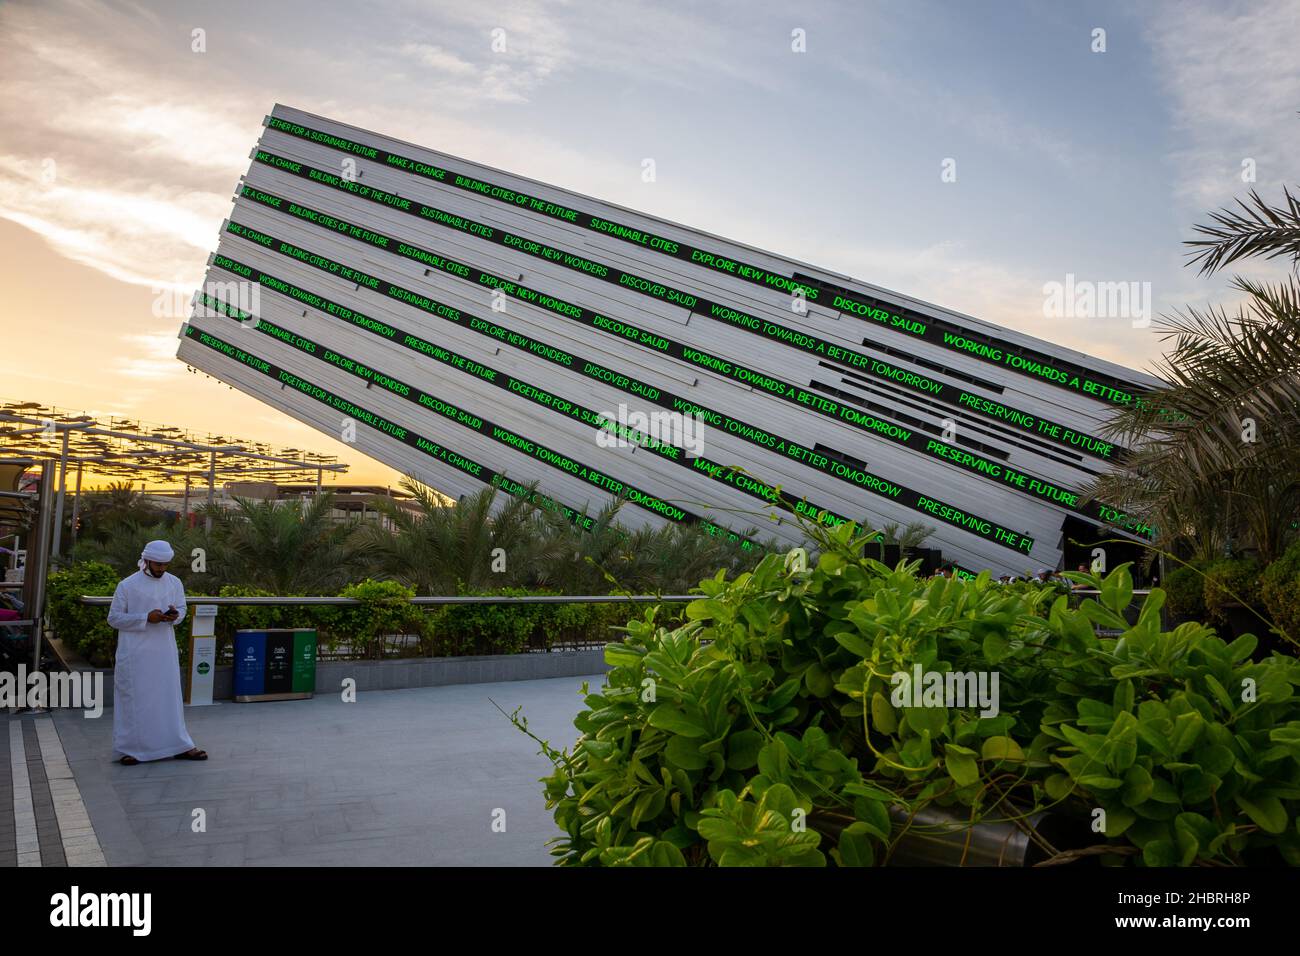 Dubai, UAE, 09.12.2021. Saudi Arabia Pavilion at Expo 2020 Dubai, the second largest pavilion at Expo with green illuminated captions. Stock Photo